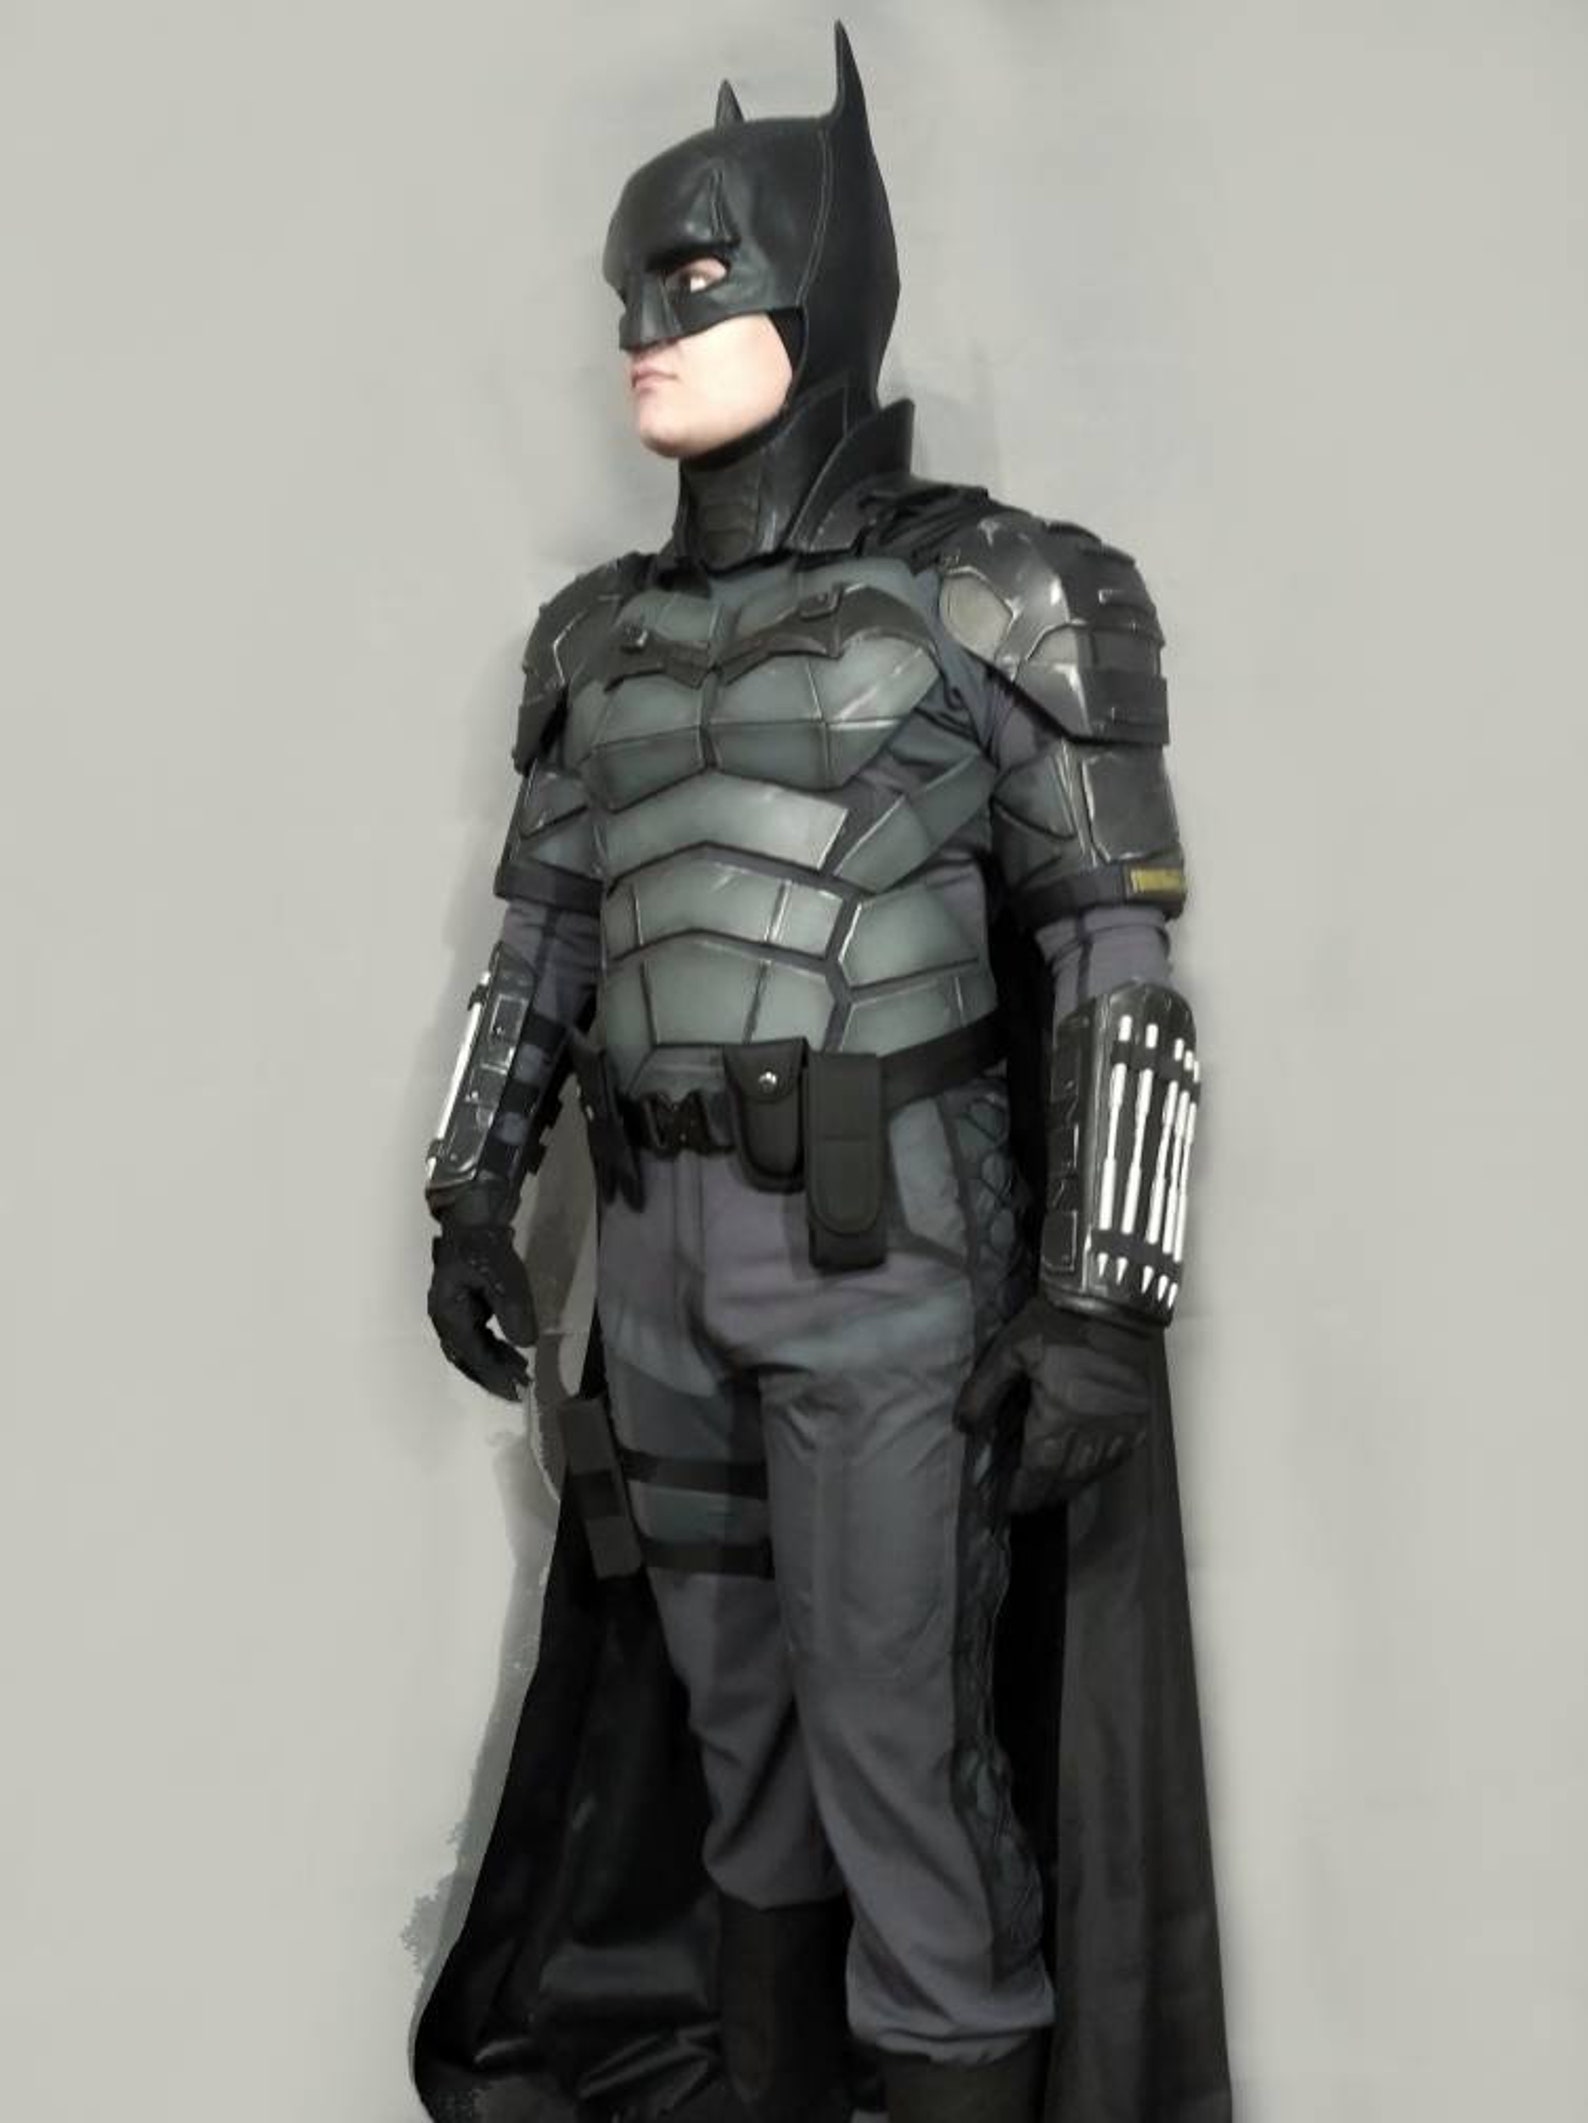 Batman costume etsy